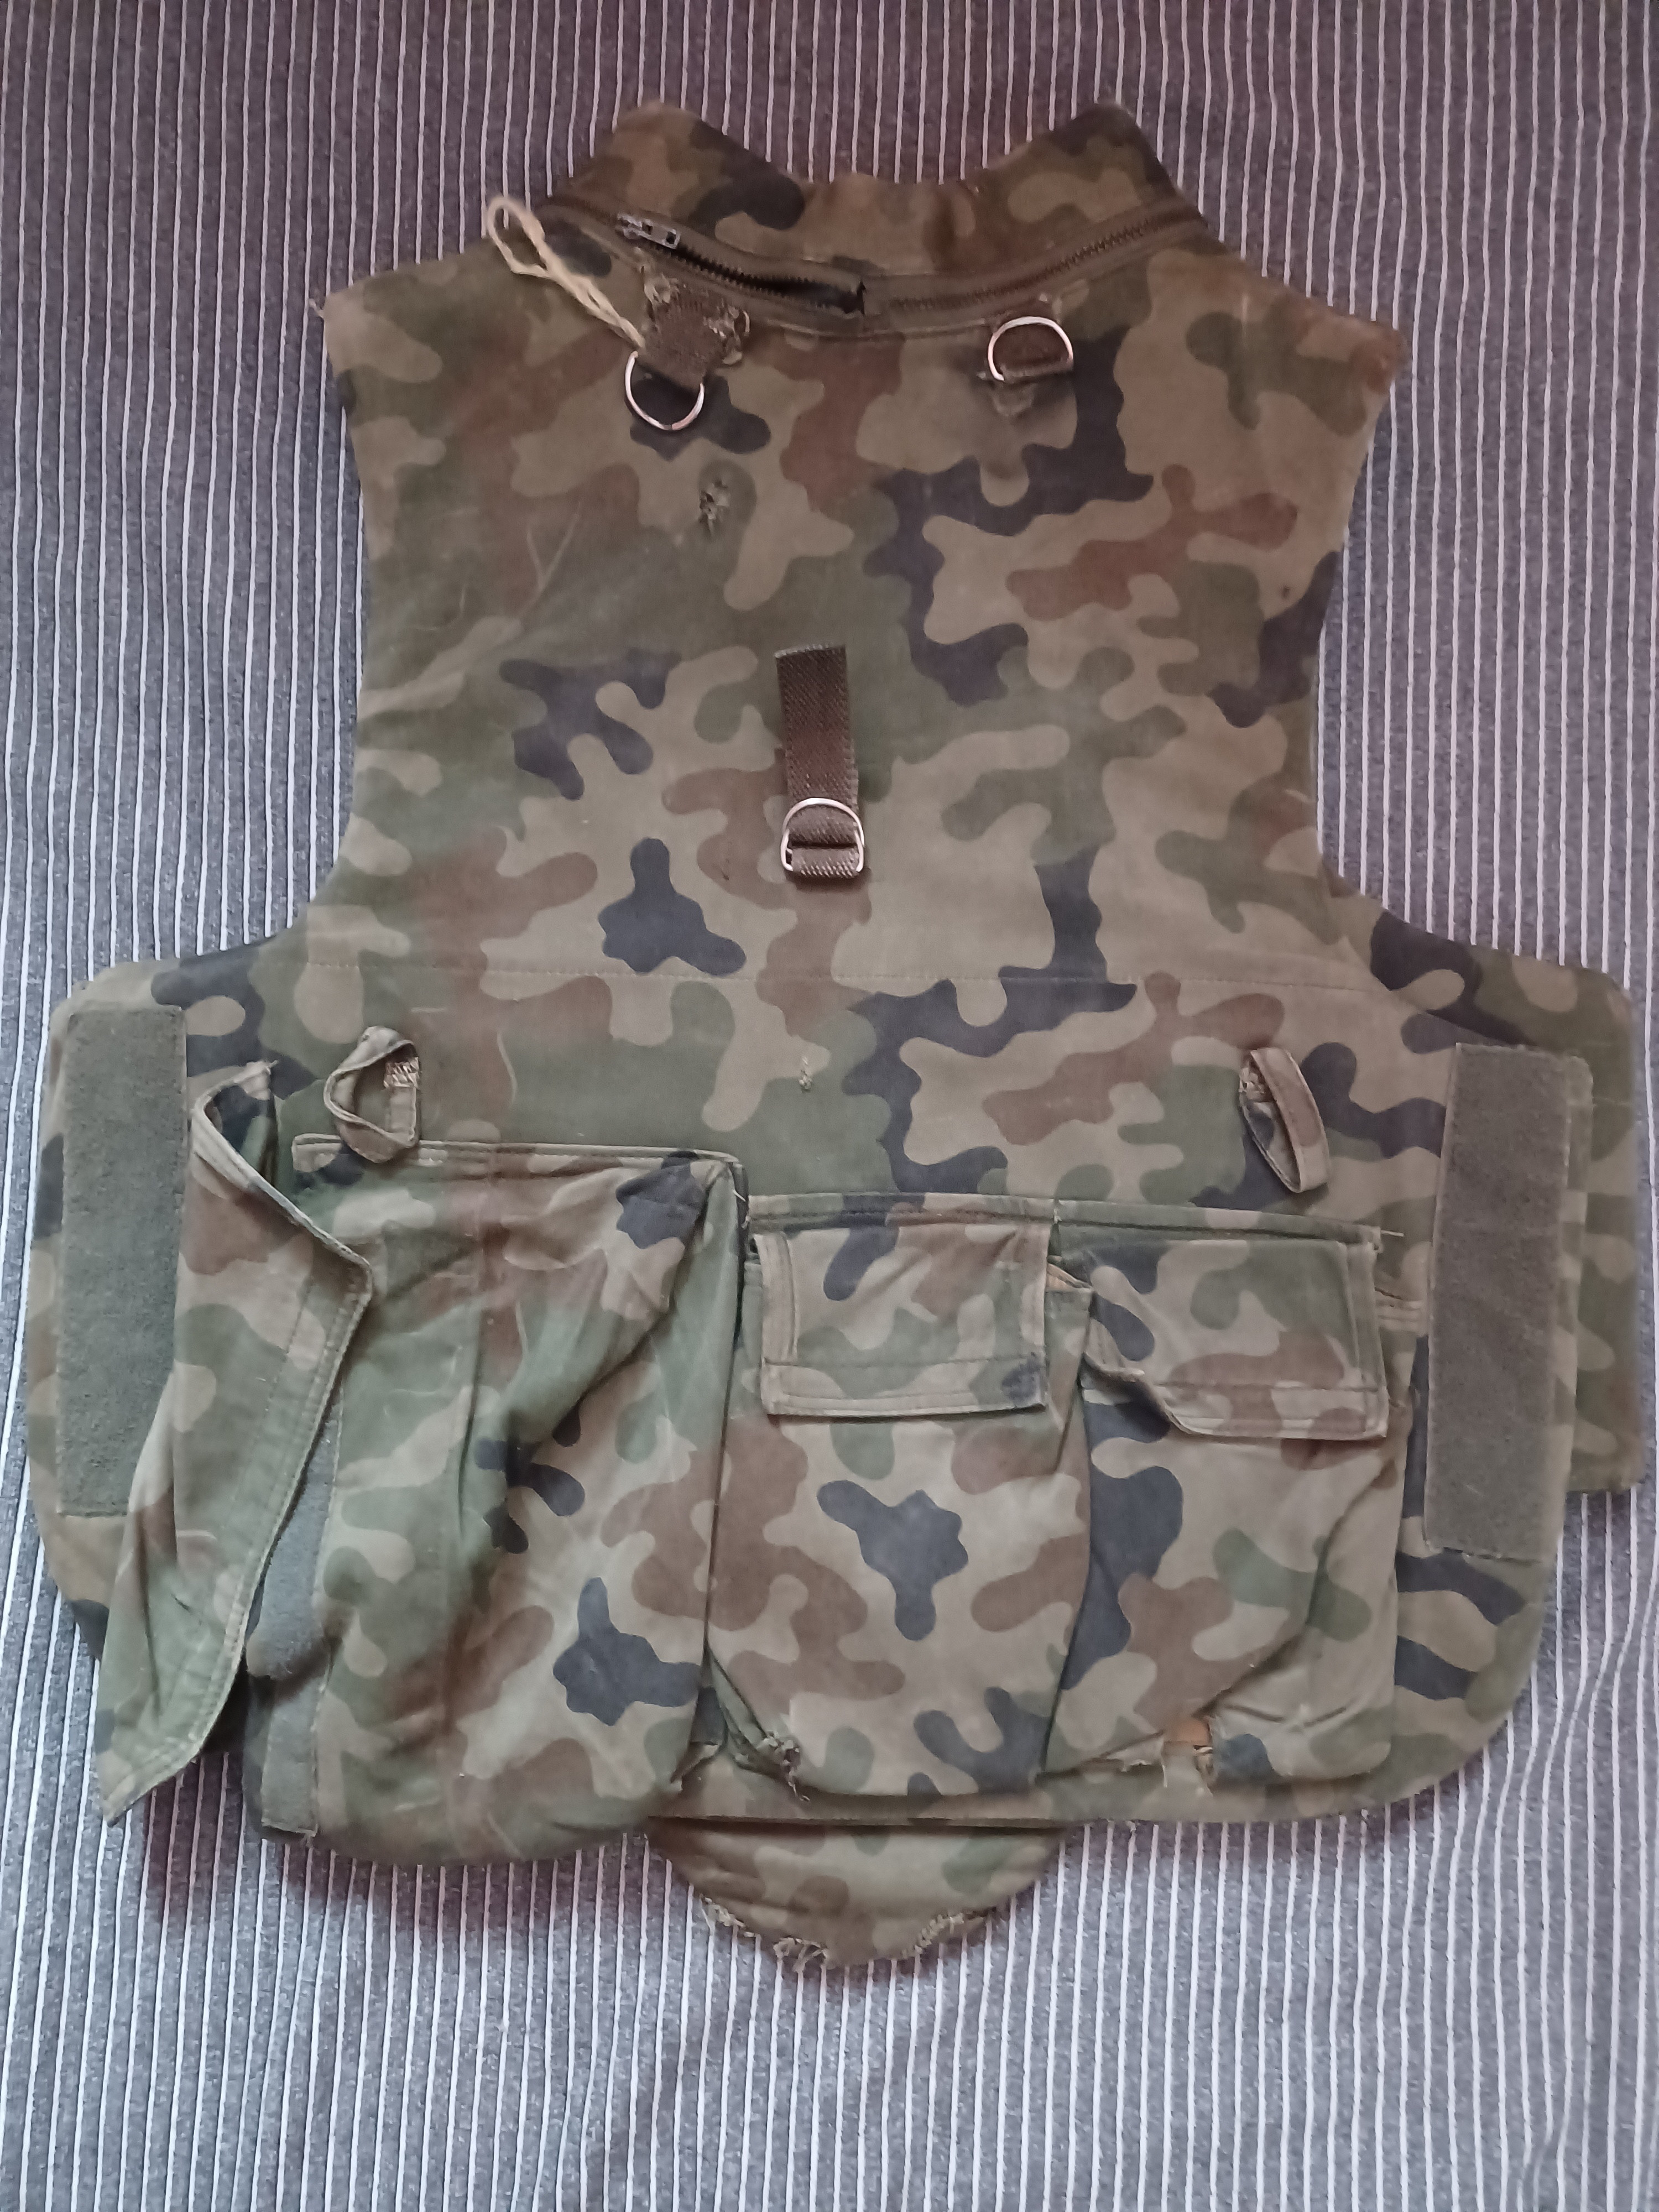 1990s Polish body armor vest - OCHRA 20210922-172521